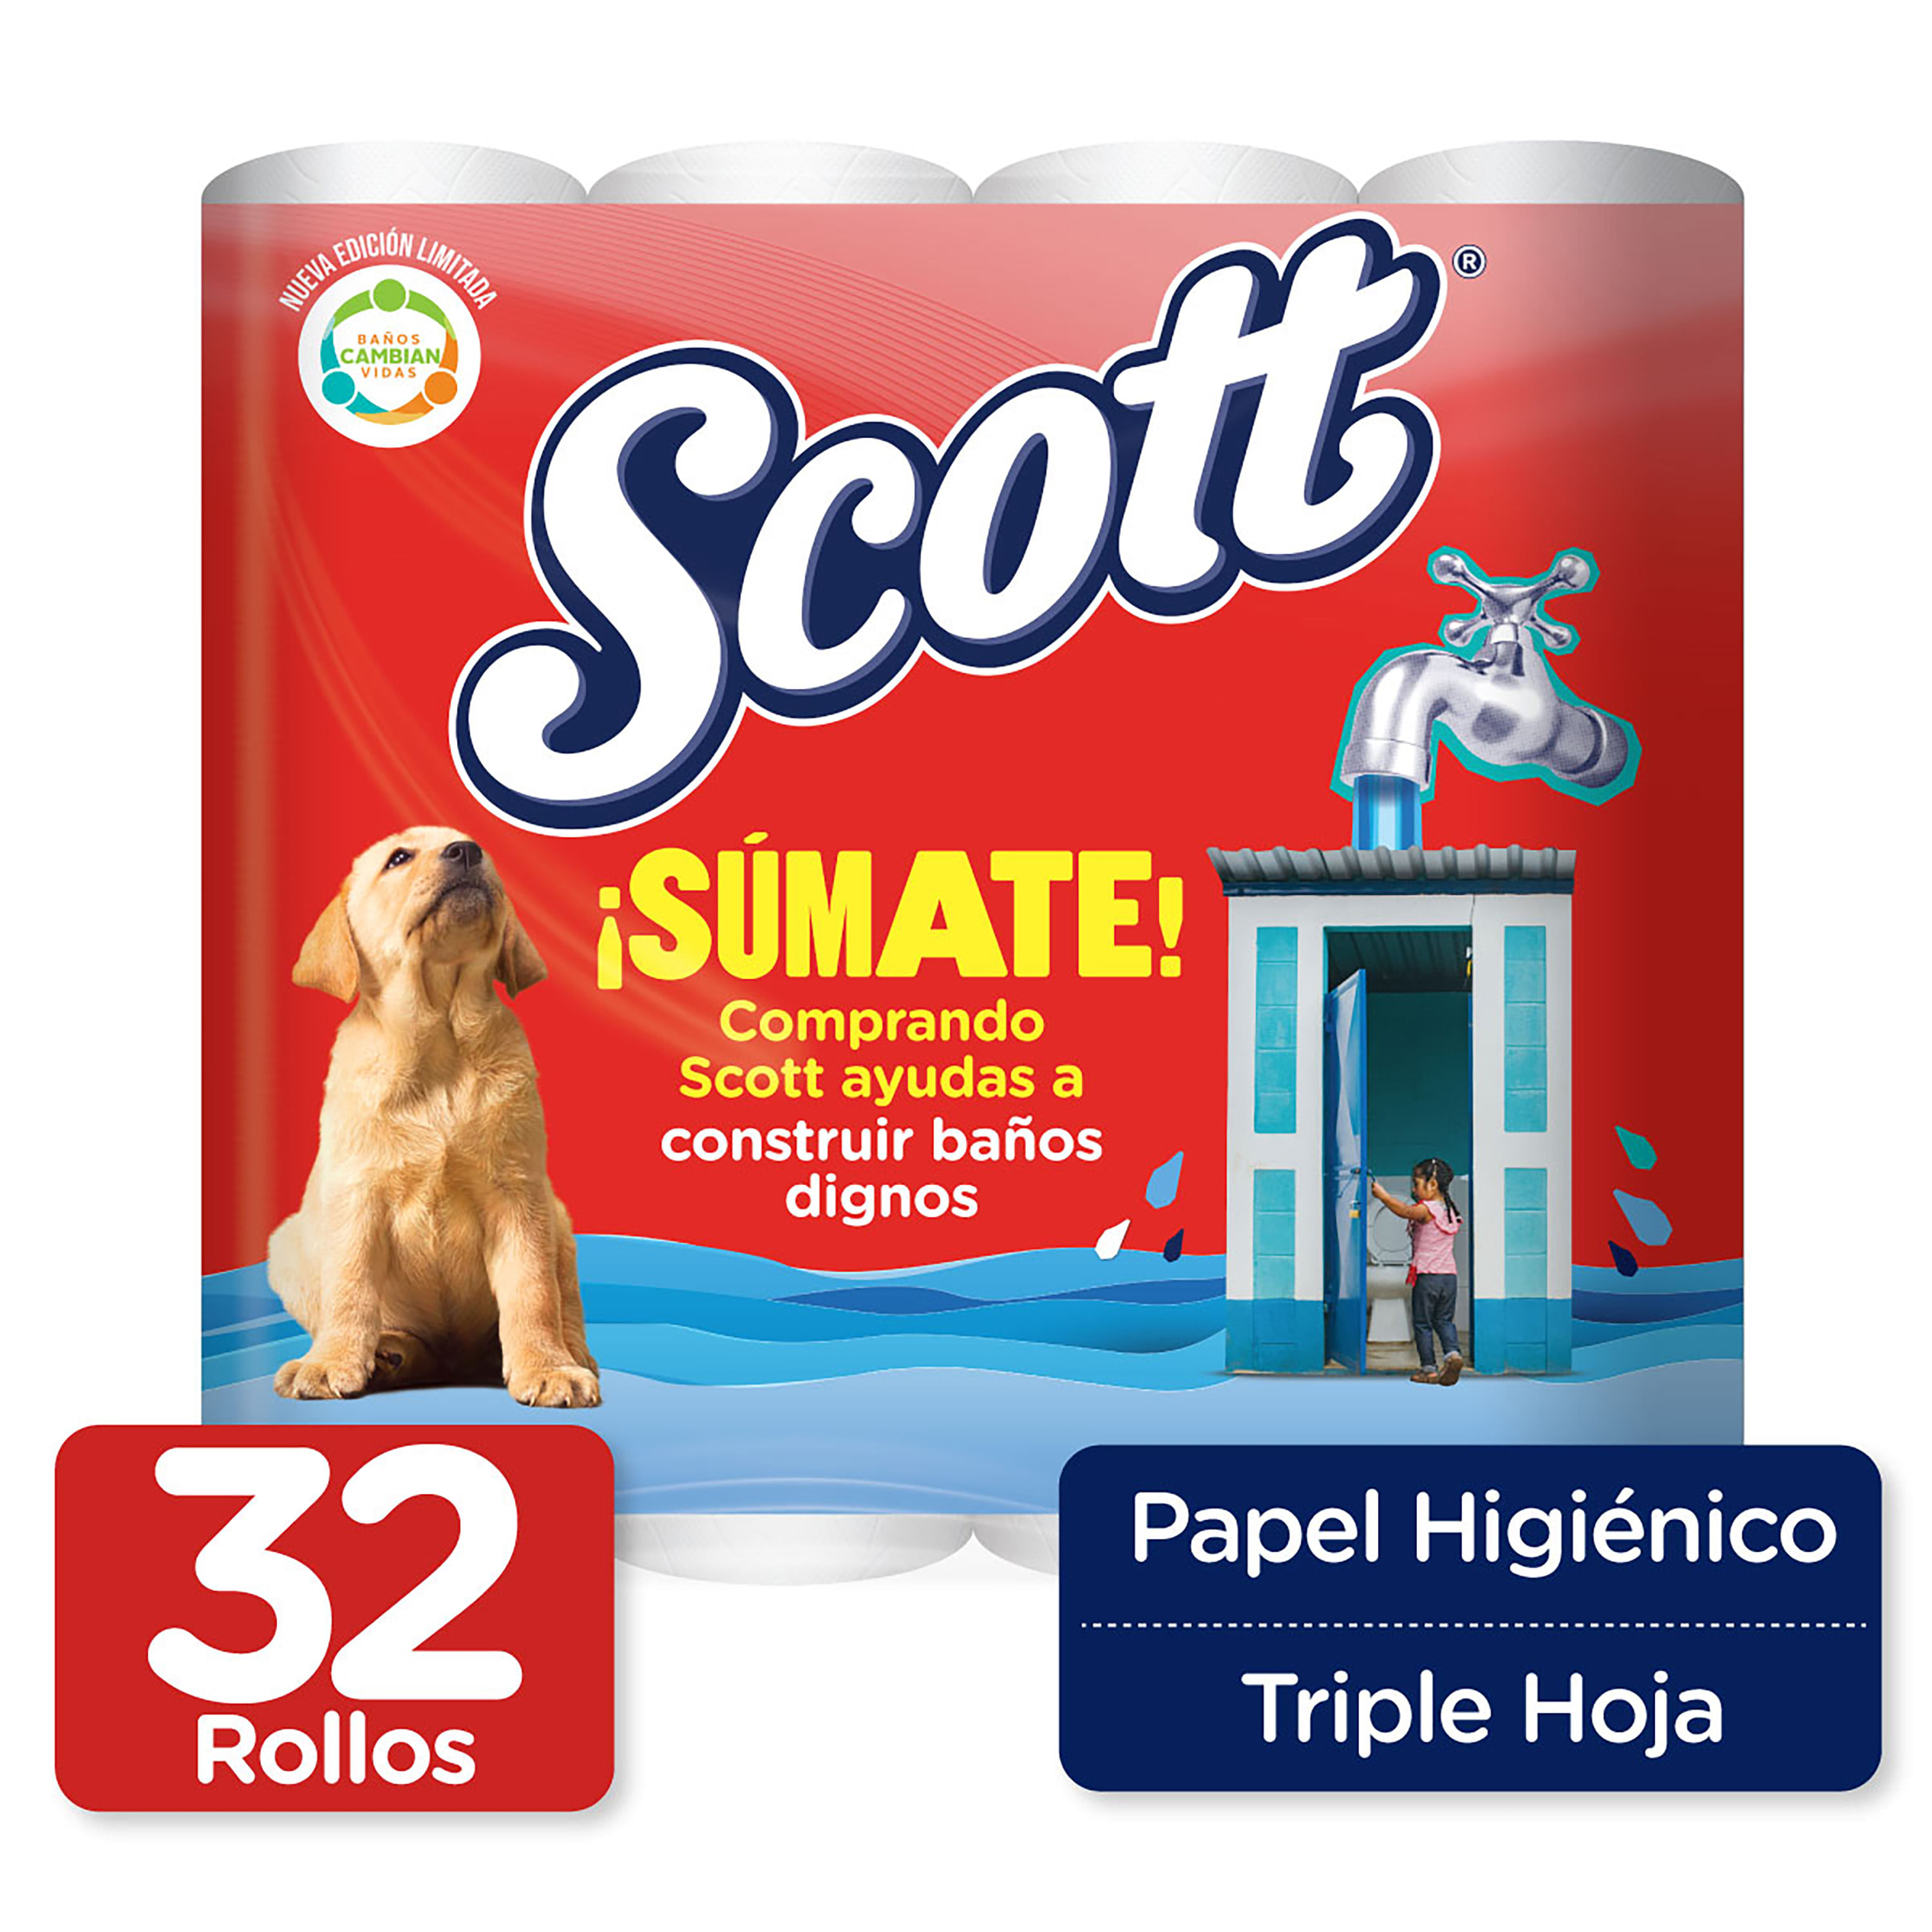 Scottex Clean - Papel higiénico completo, paquete de 24 rollos (8 x 3),  77.96 oz